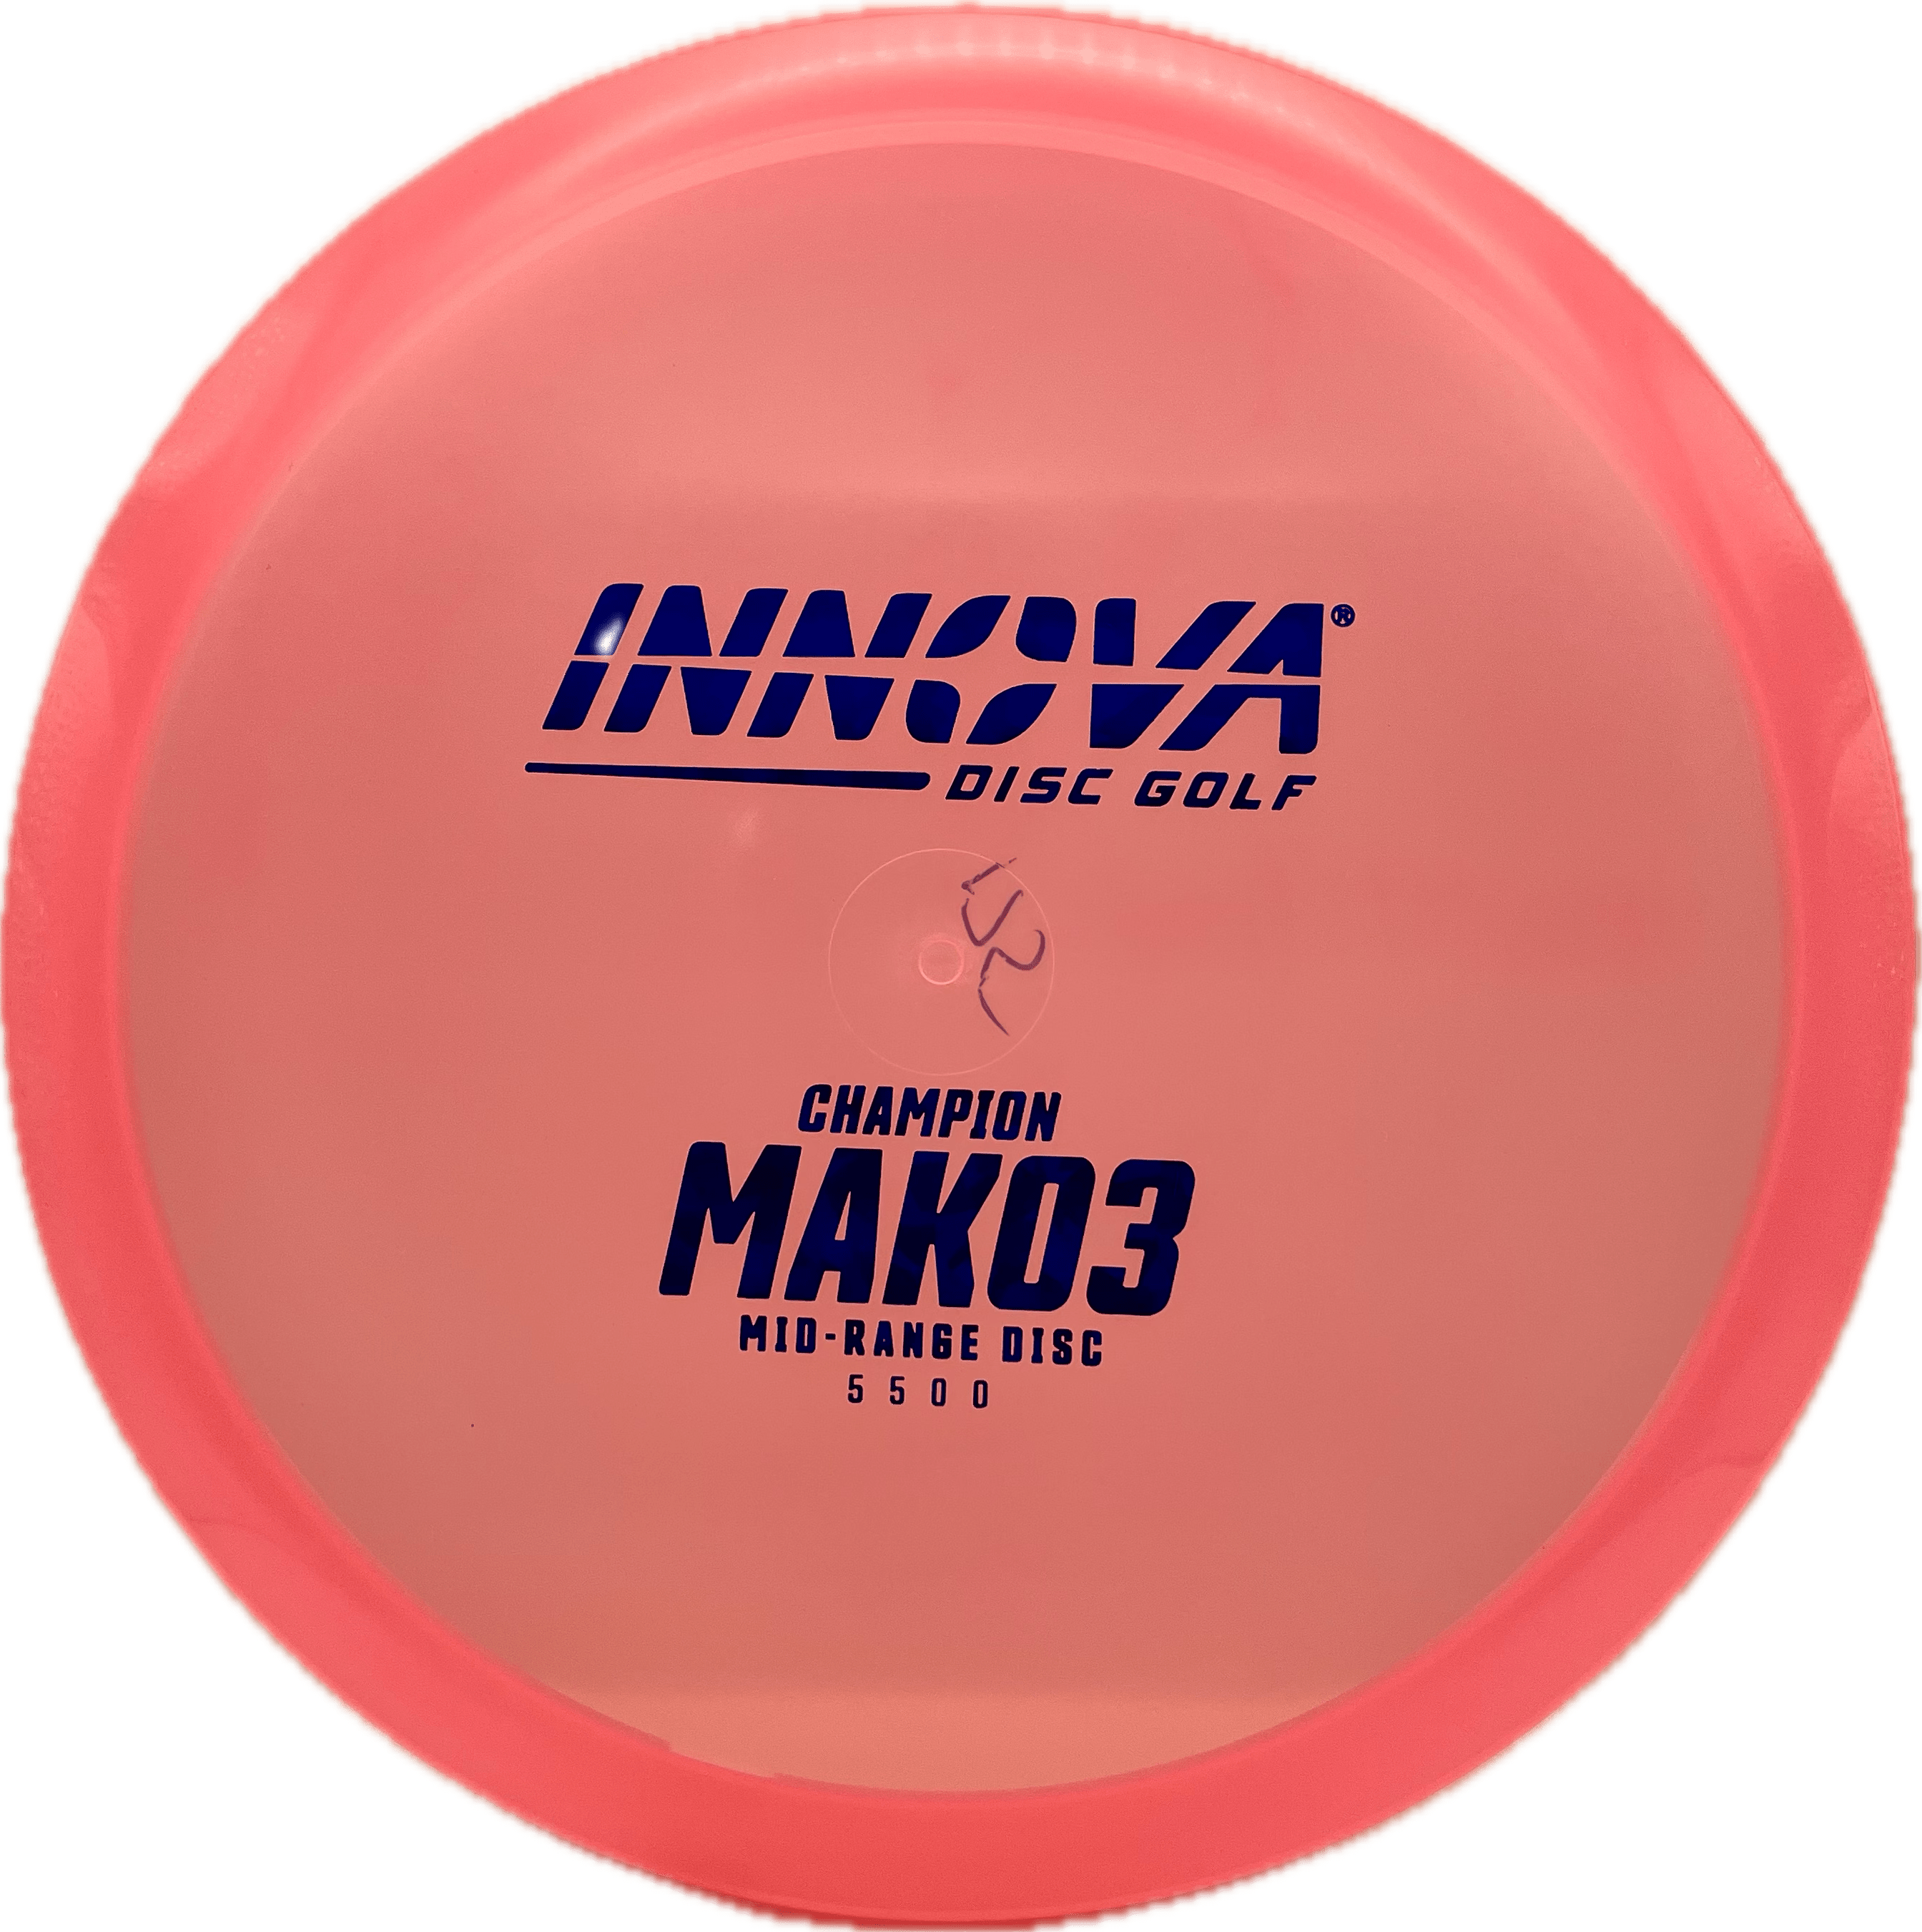 Innova Disc Innova Mako3, Champion, 175, Pink, Blue Shatter